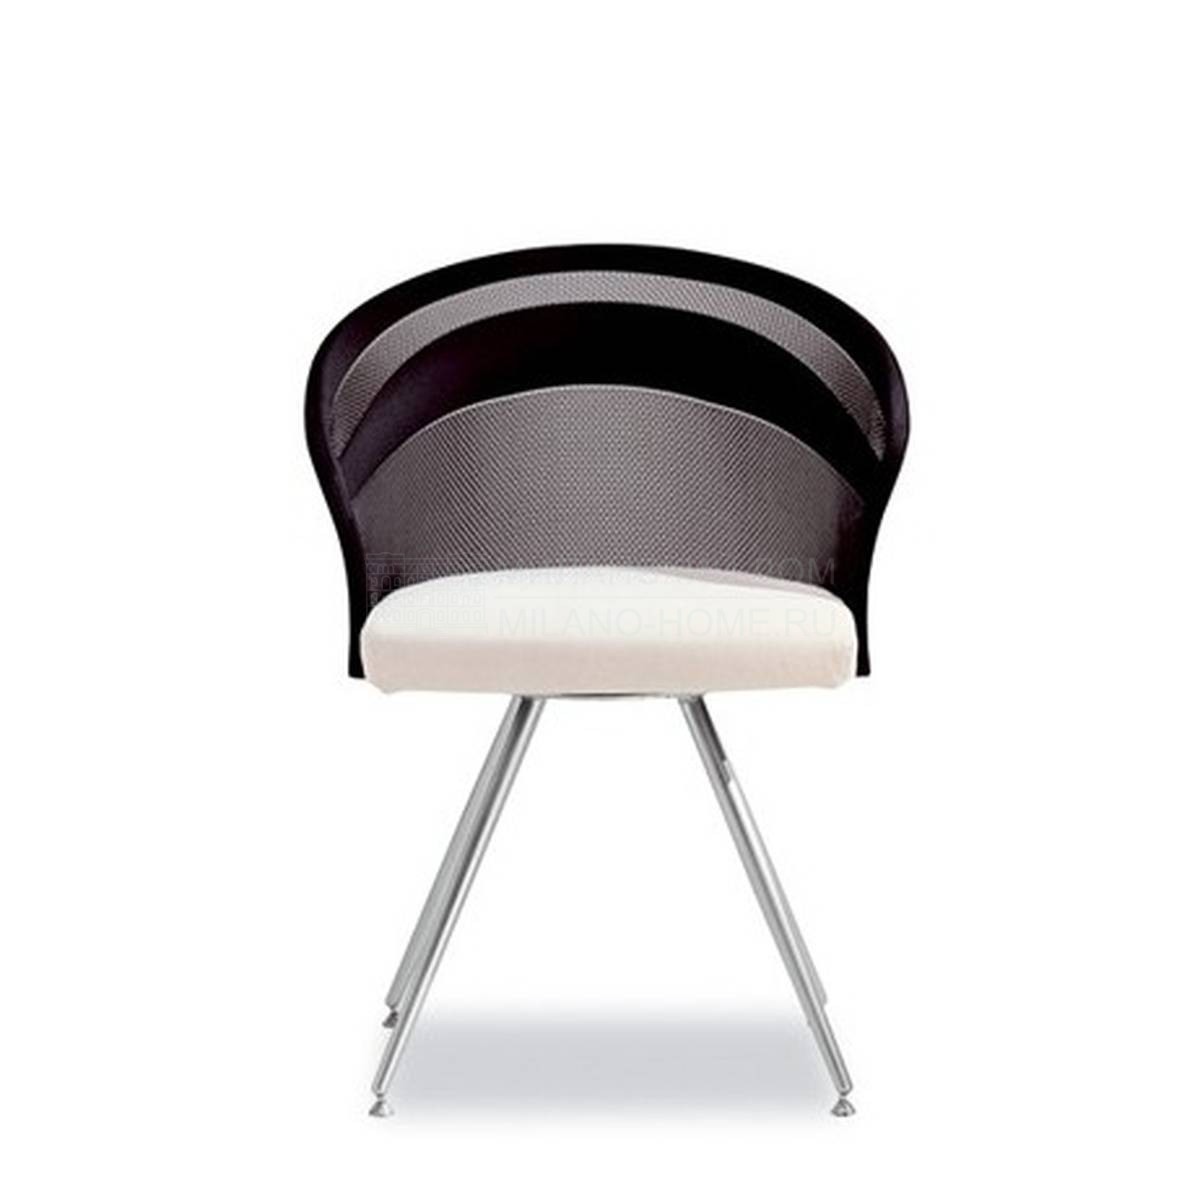 Полукресло Shells chair из Италии фабрики TONON